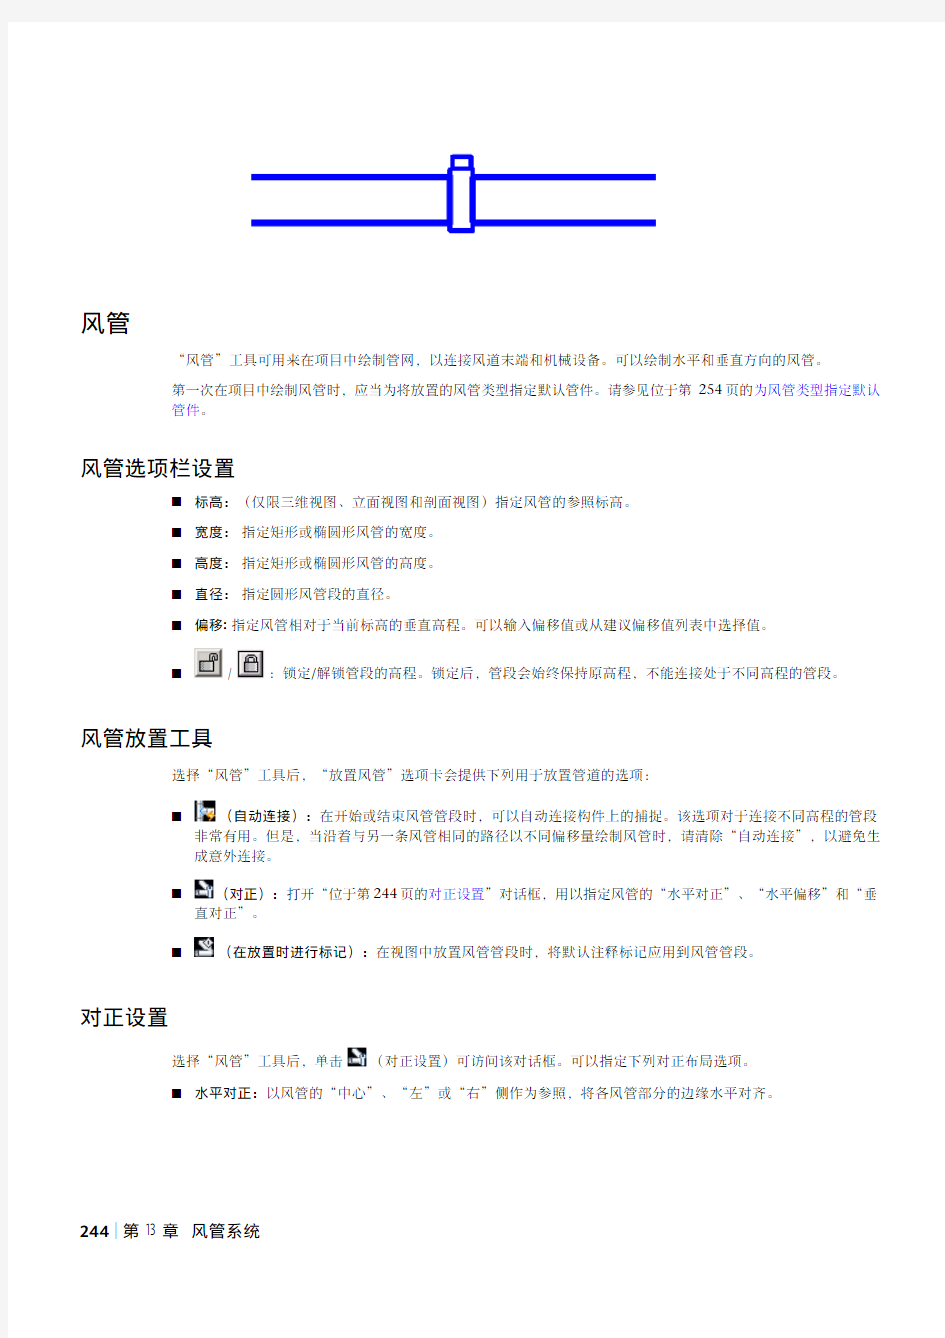 Revit MEP 2011 中文用户手册-风管系统